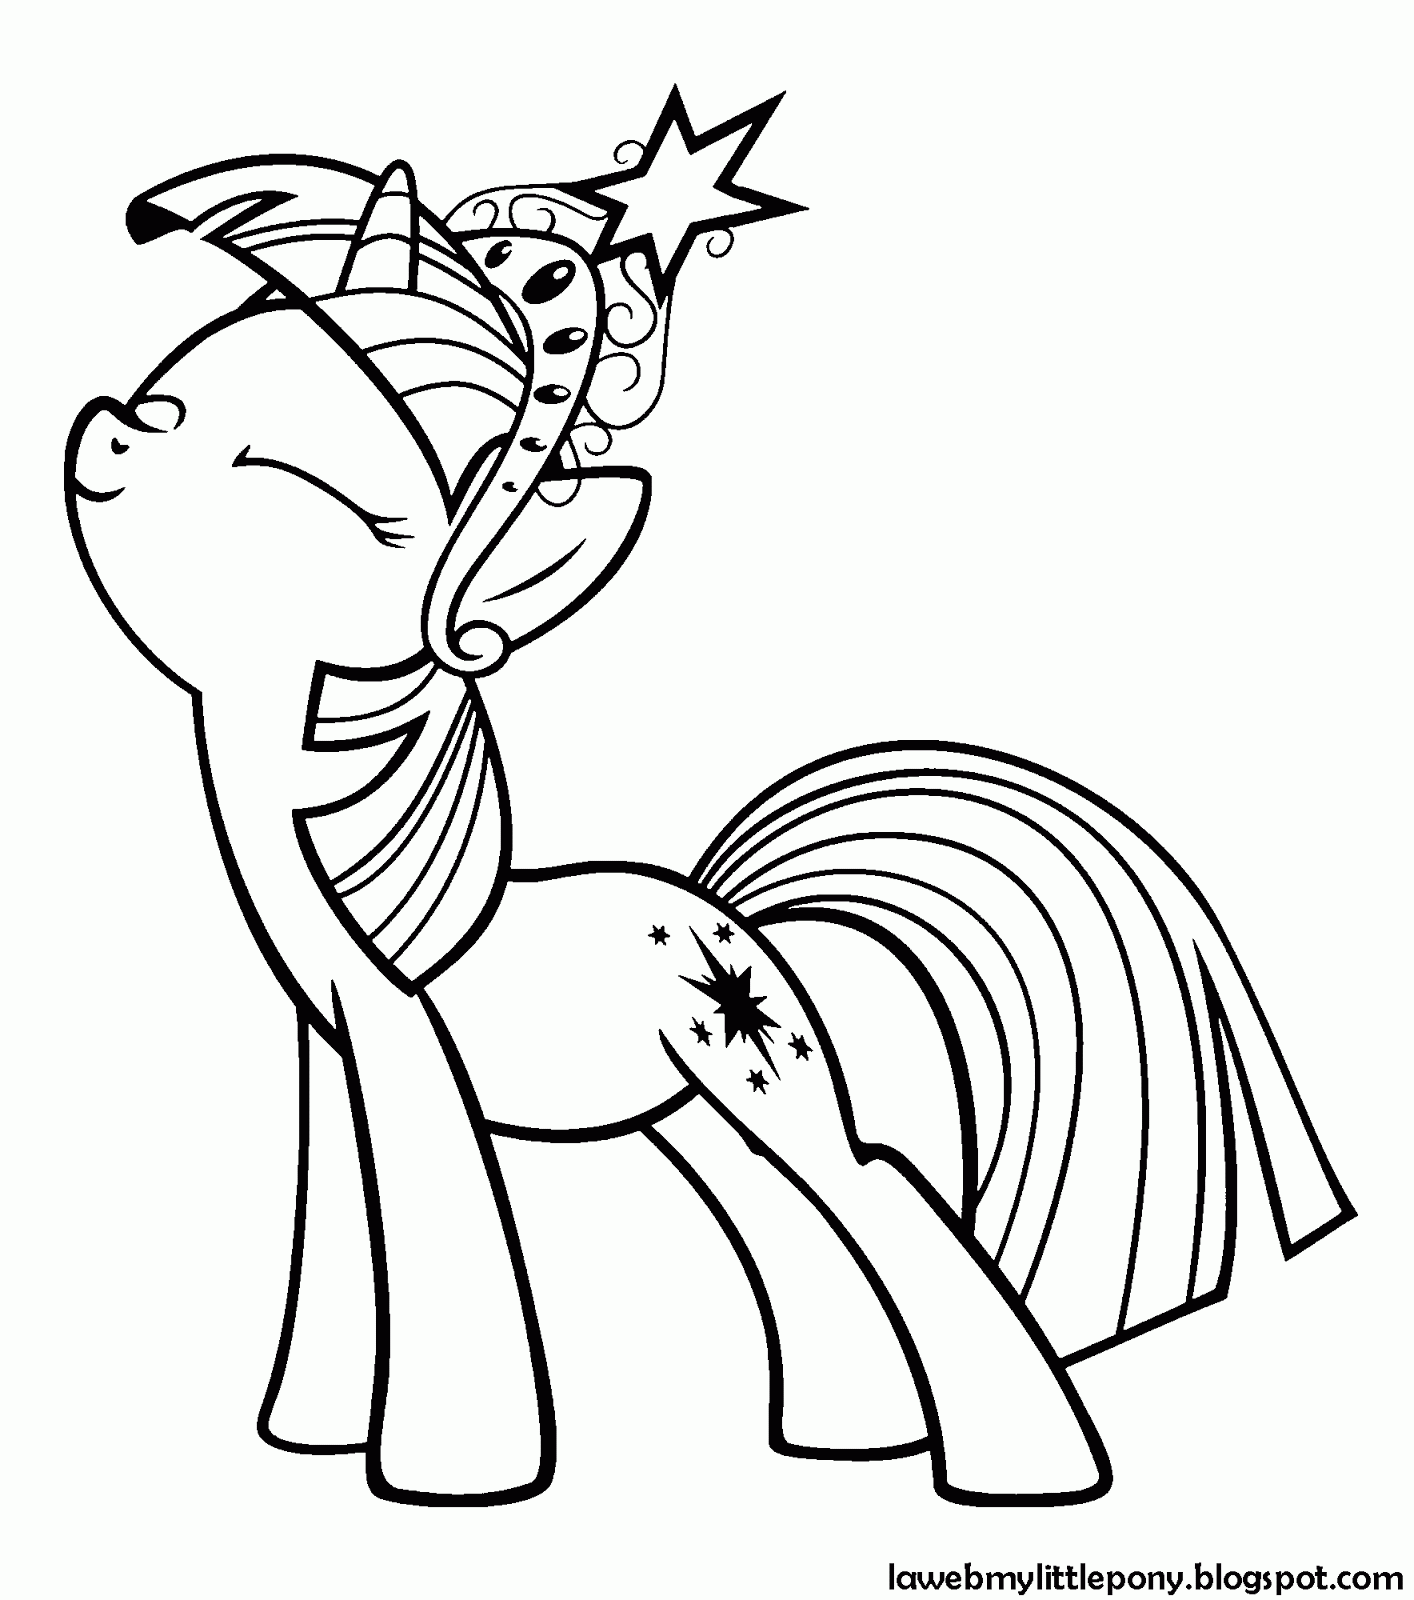 My Little Pony: Dibujos para colorear de Twilight Sparkle de My ...